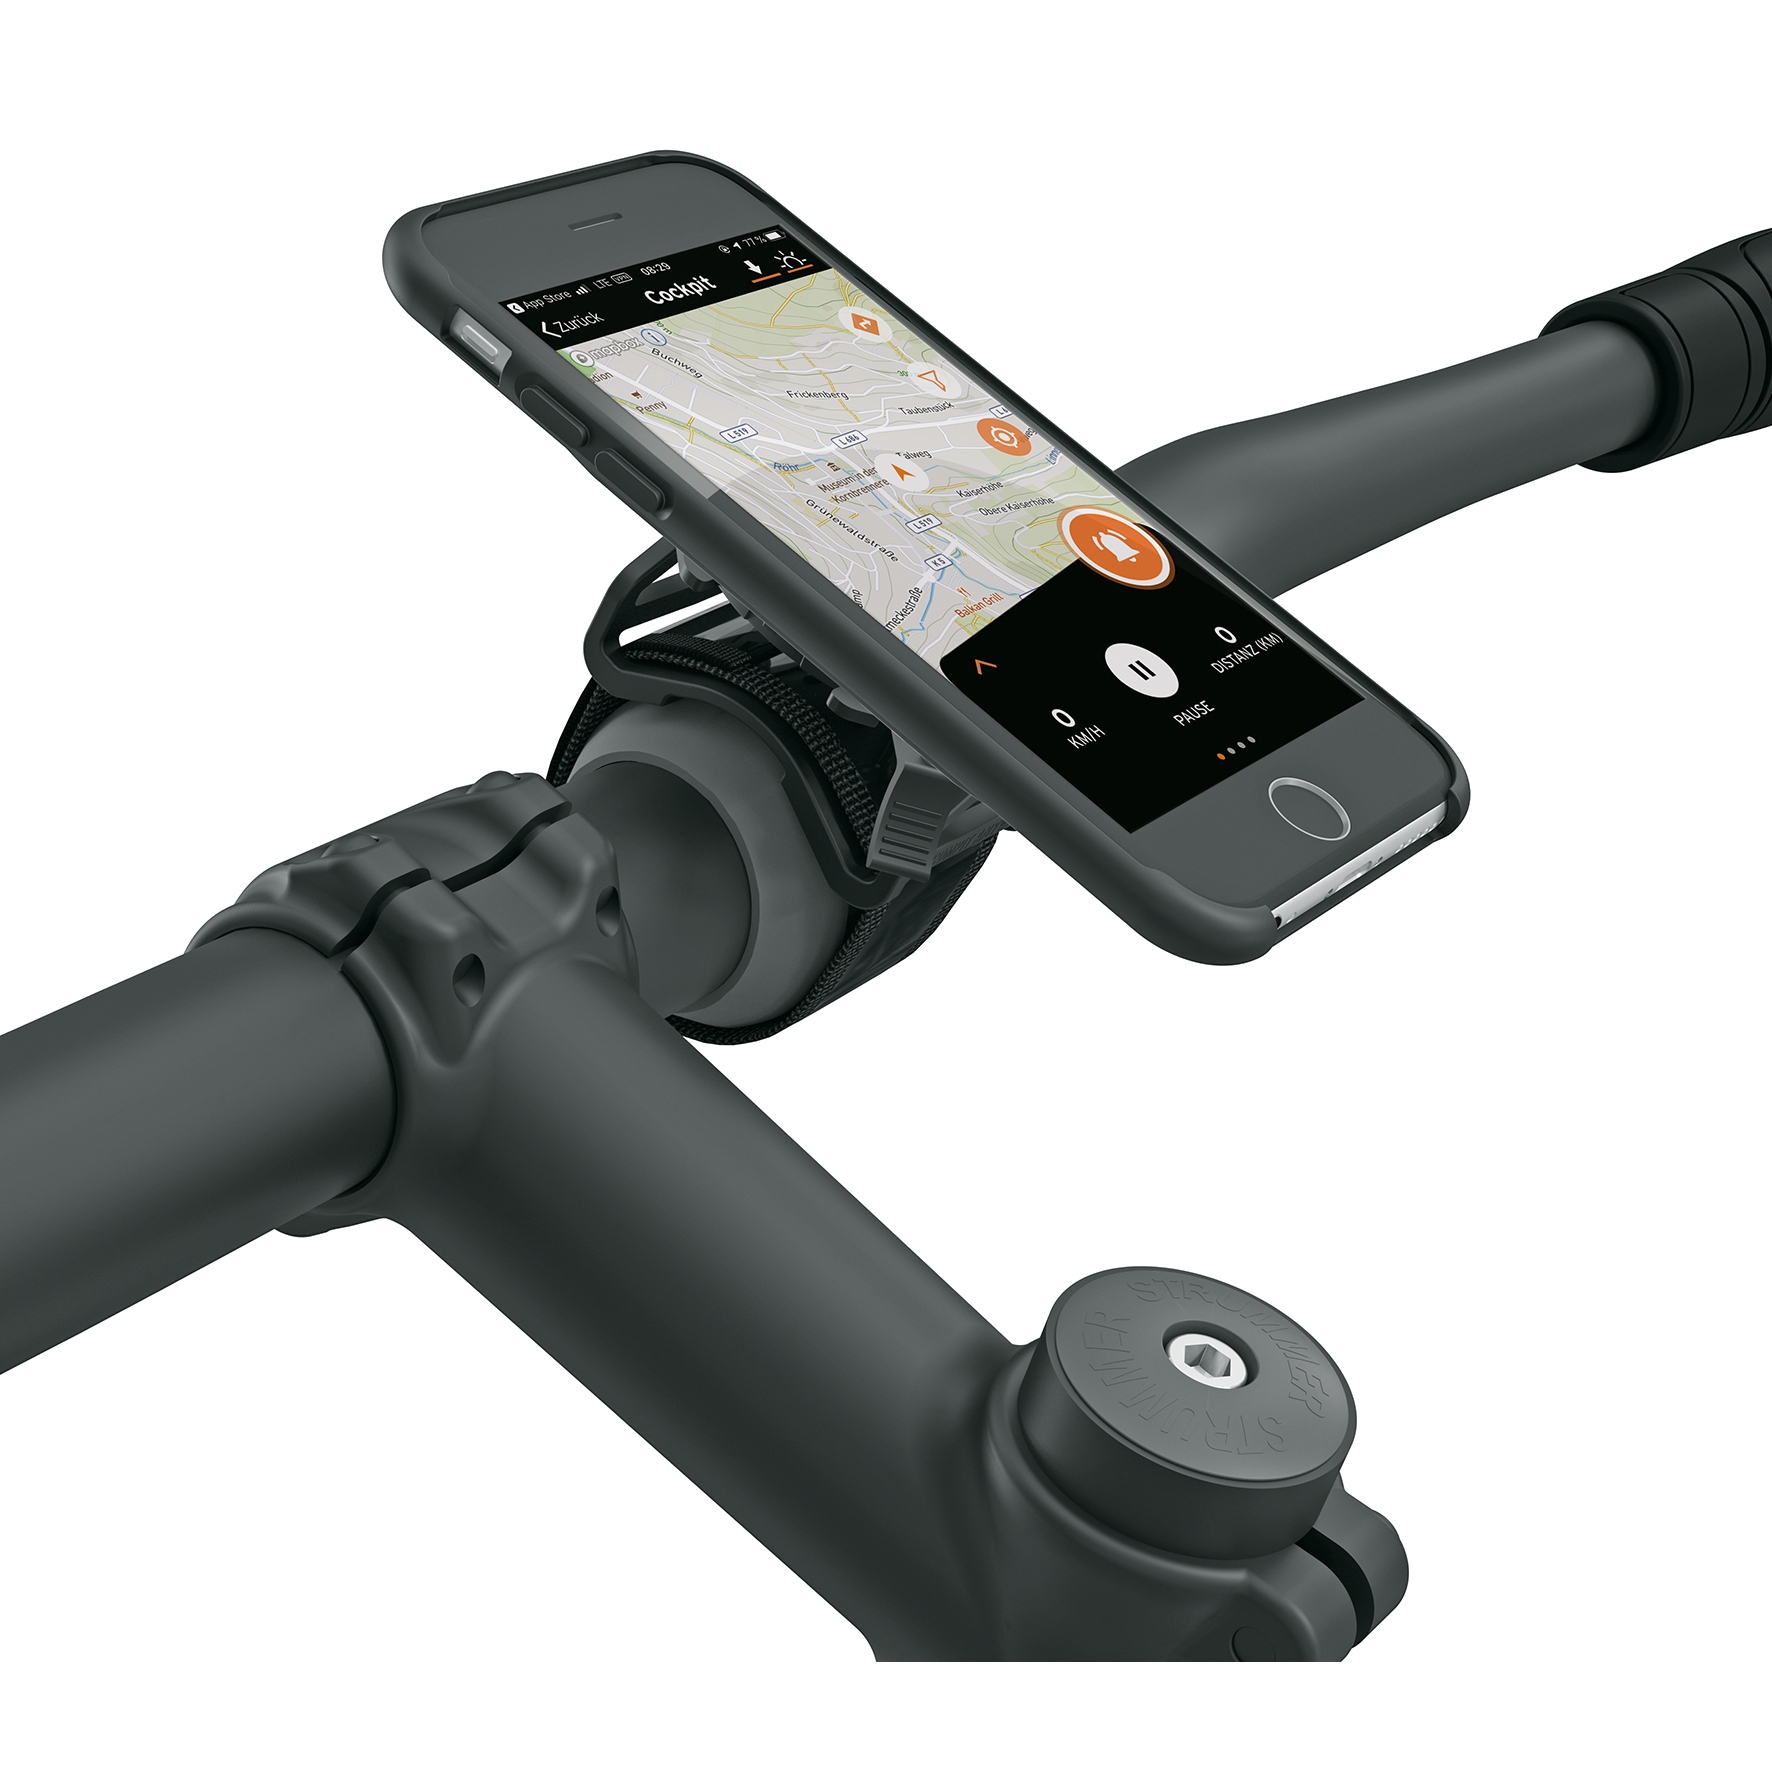 SKS COMPIT Anywere universelle Smartphone Halterung - Bikebude24